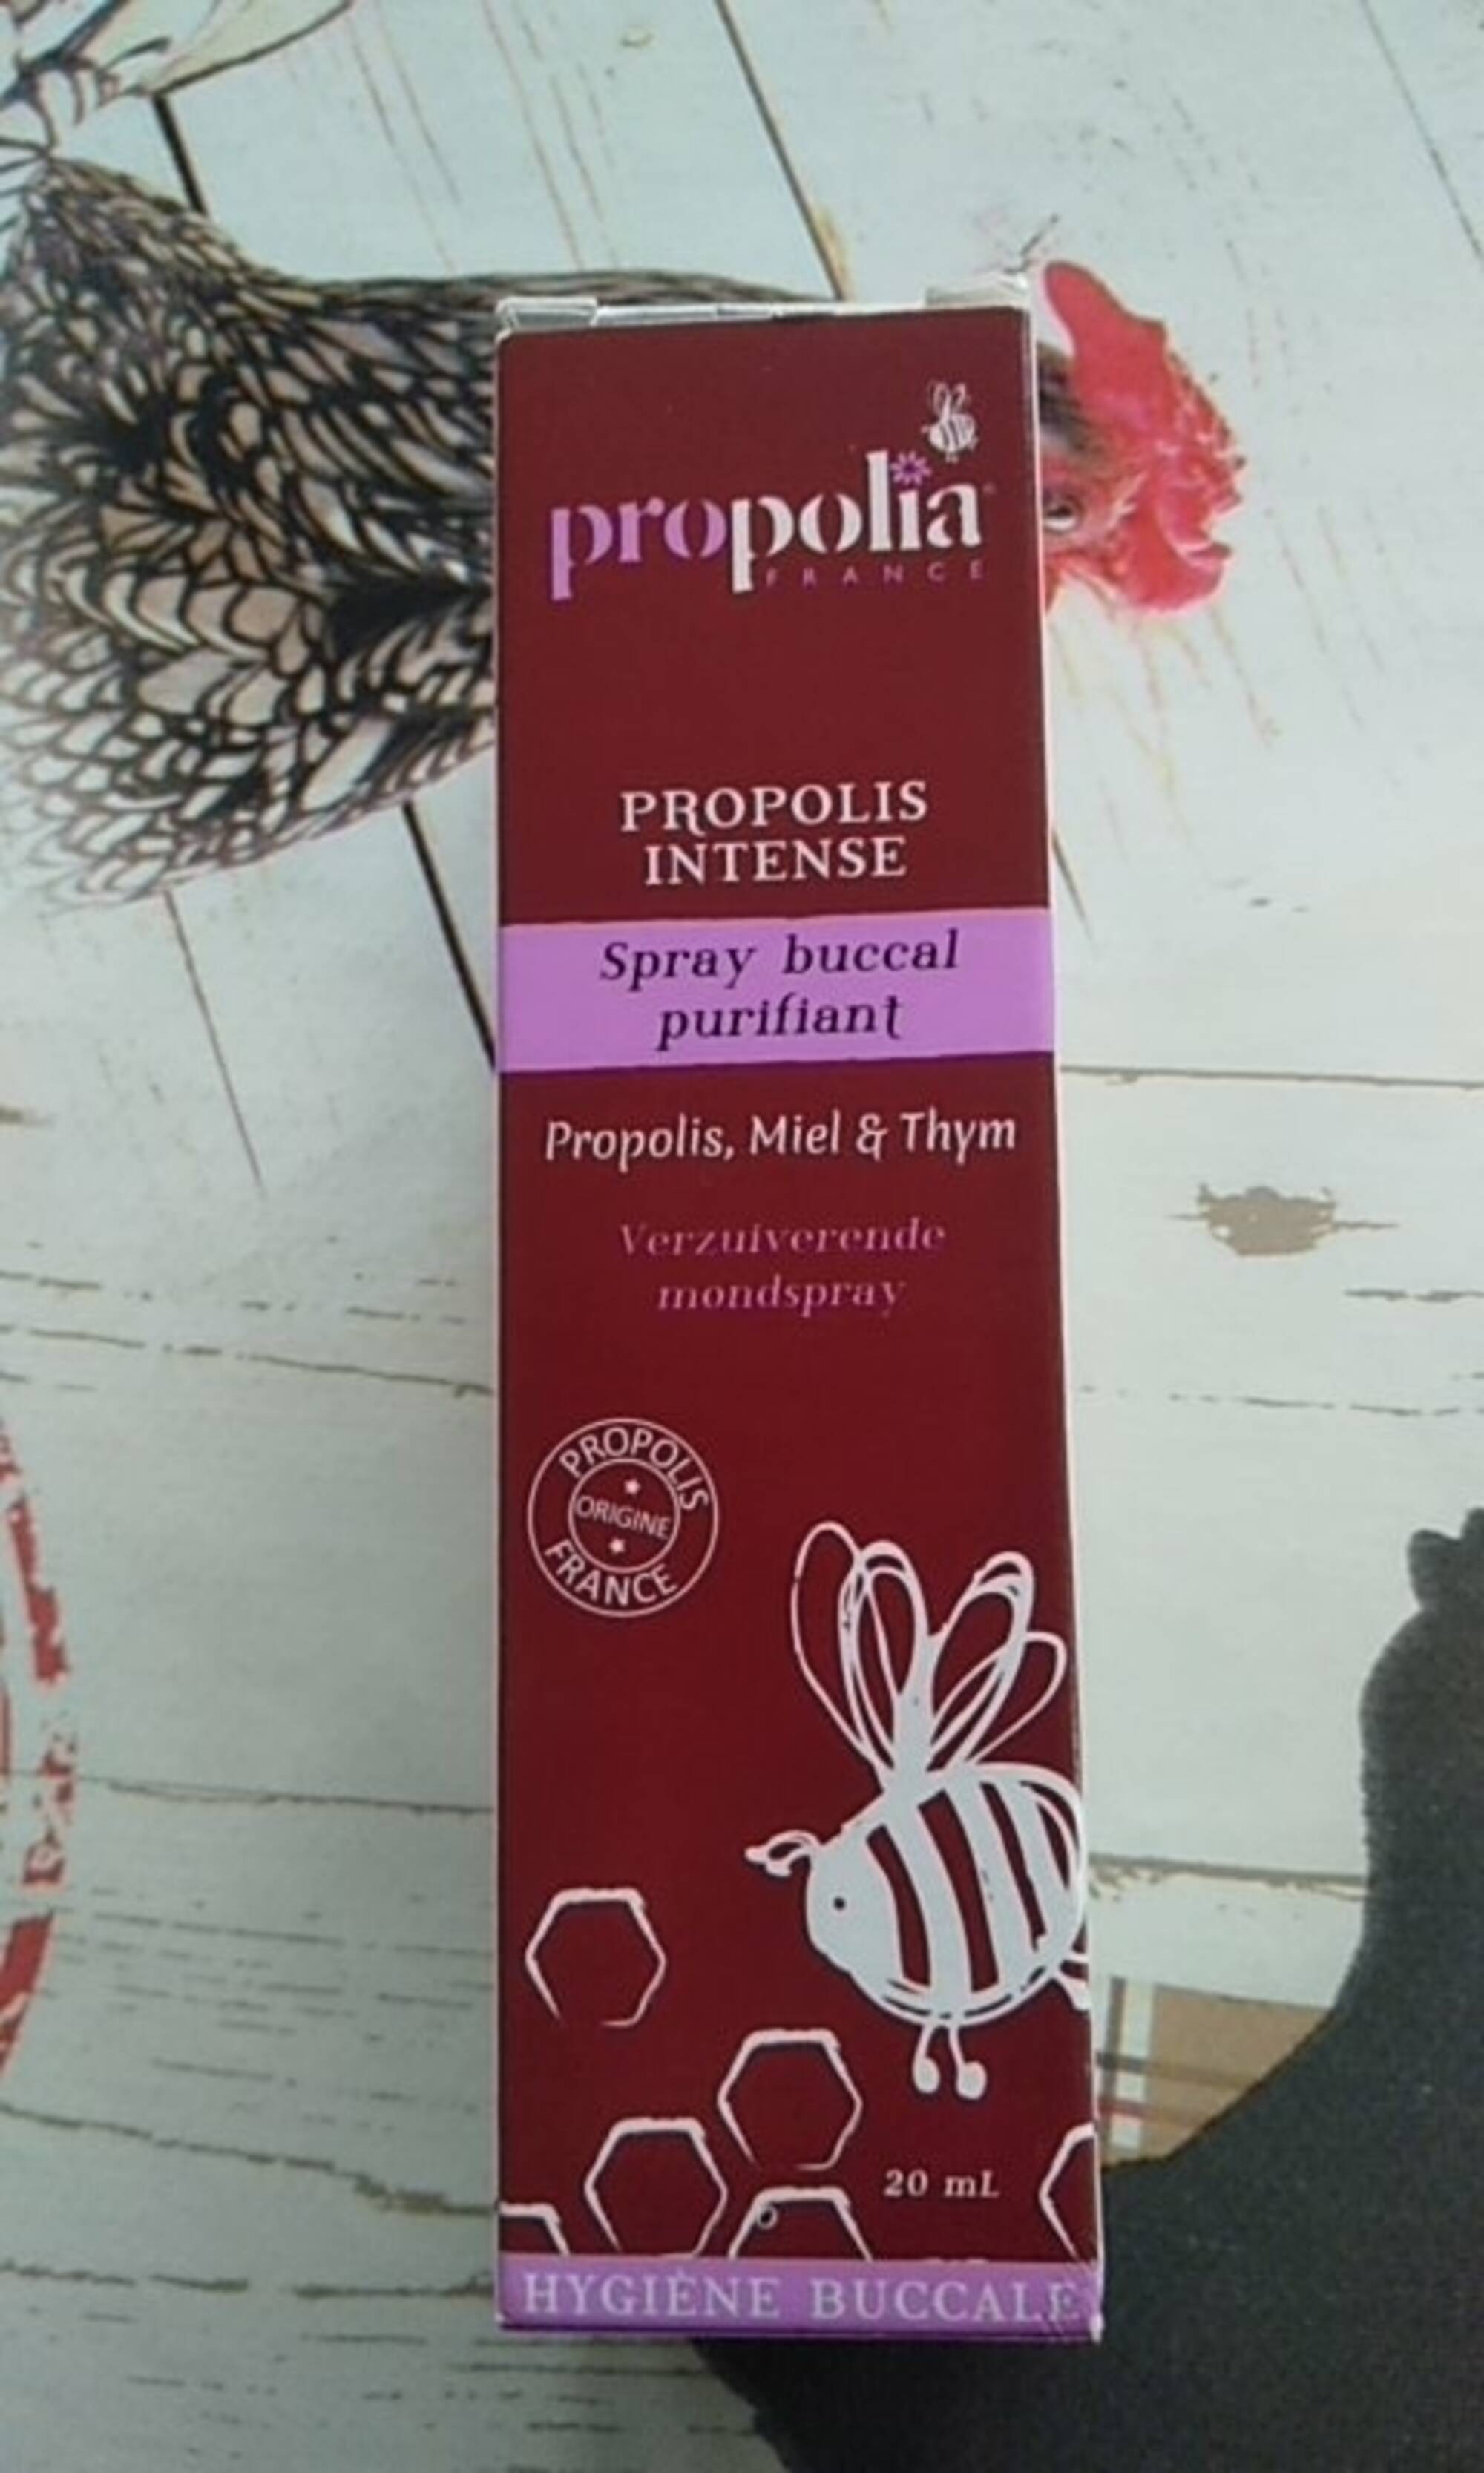 PROPOLIA - Propolis intense - Spray buccal purifiant